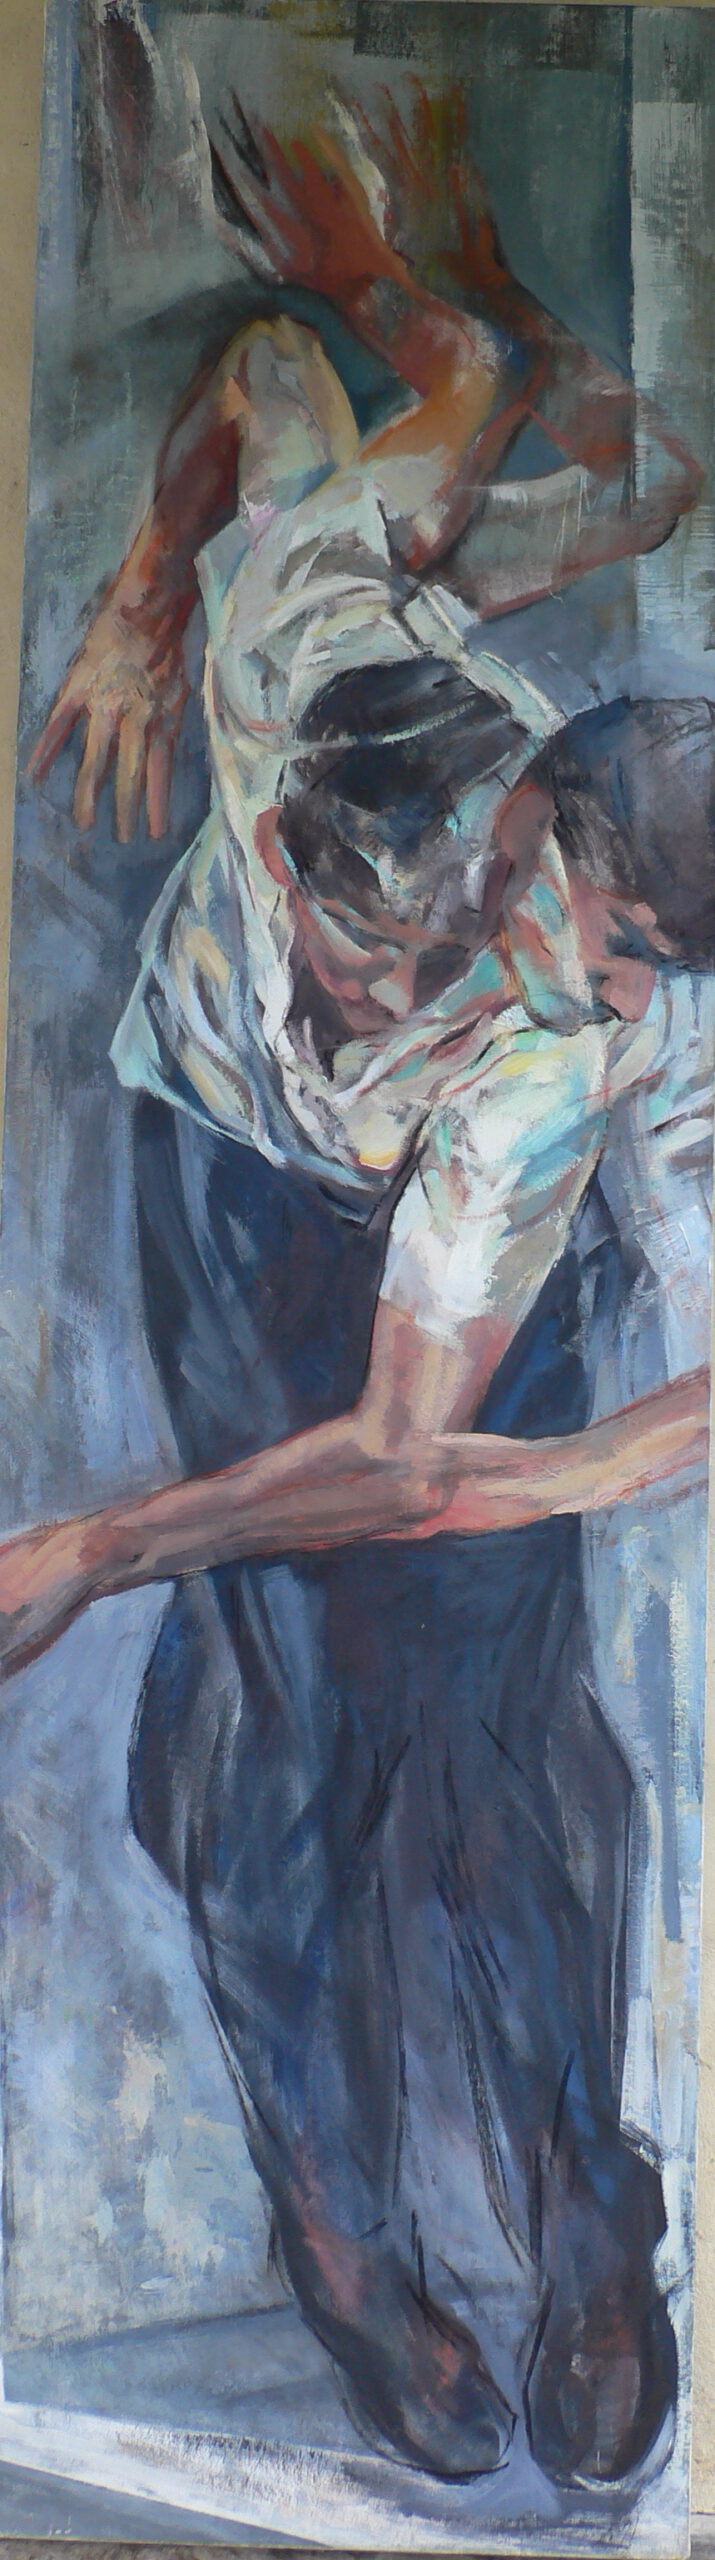 Mouvement 1992, 190/45 cm, tempera, oil / canvas